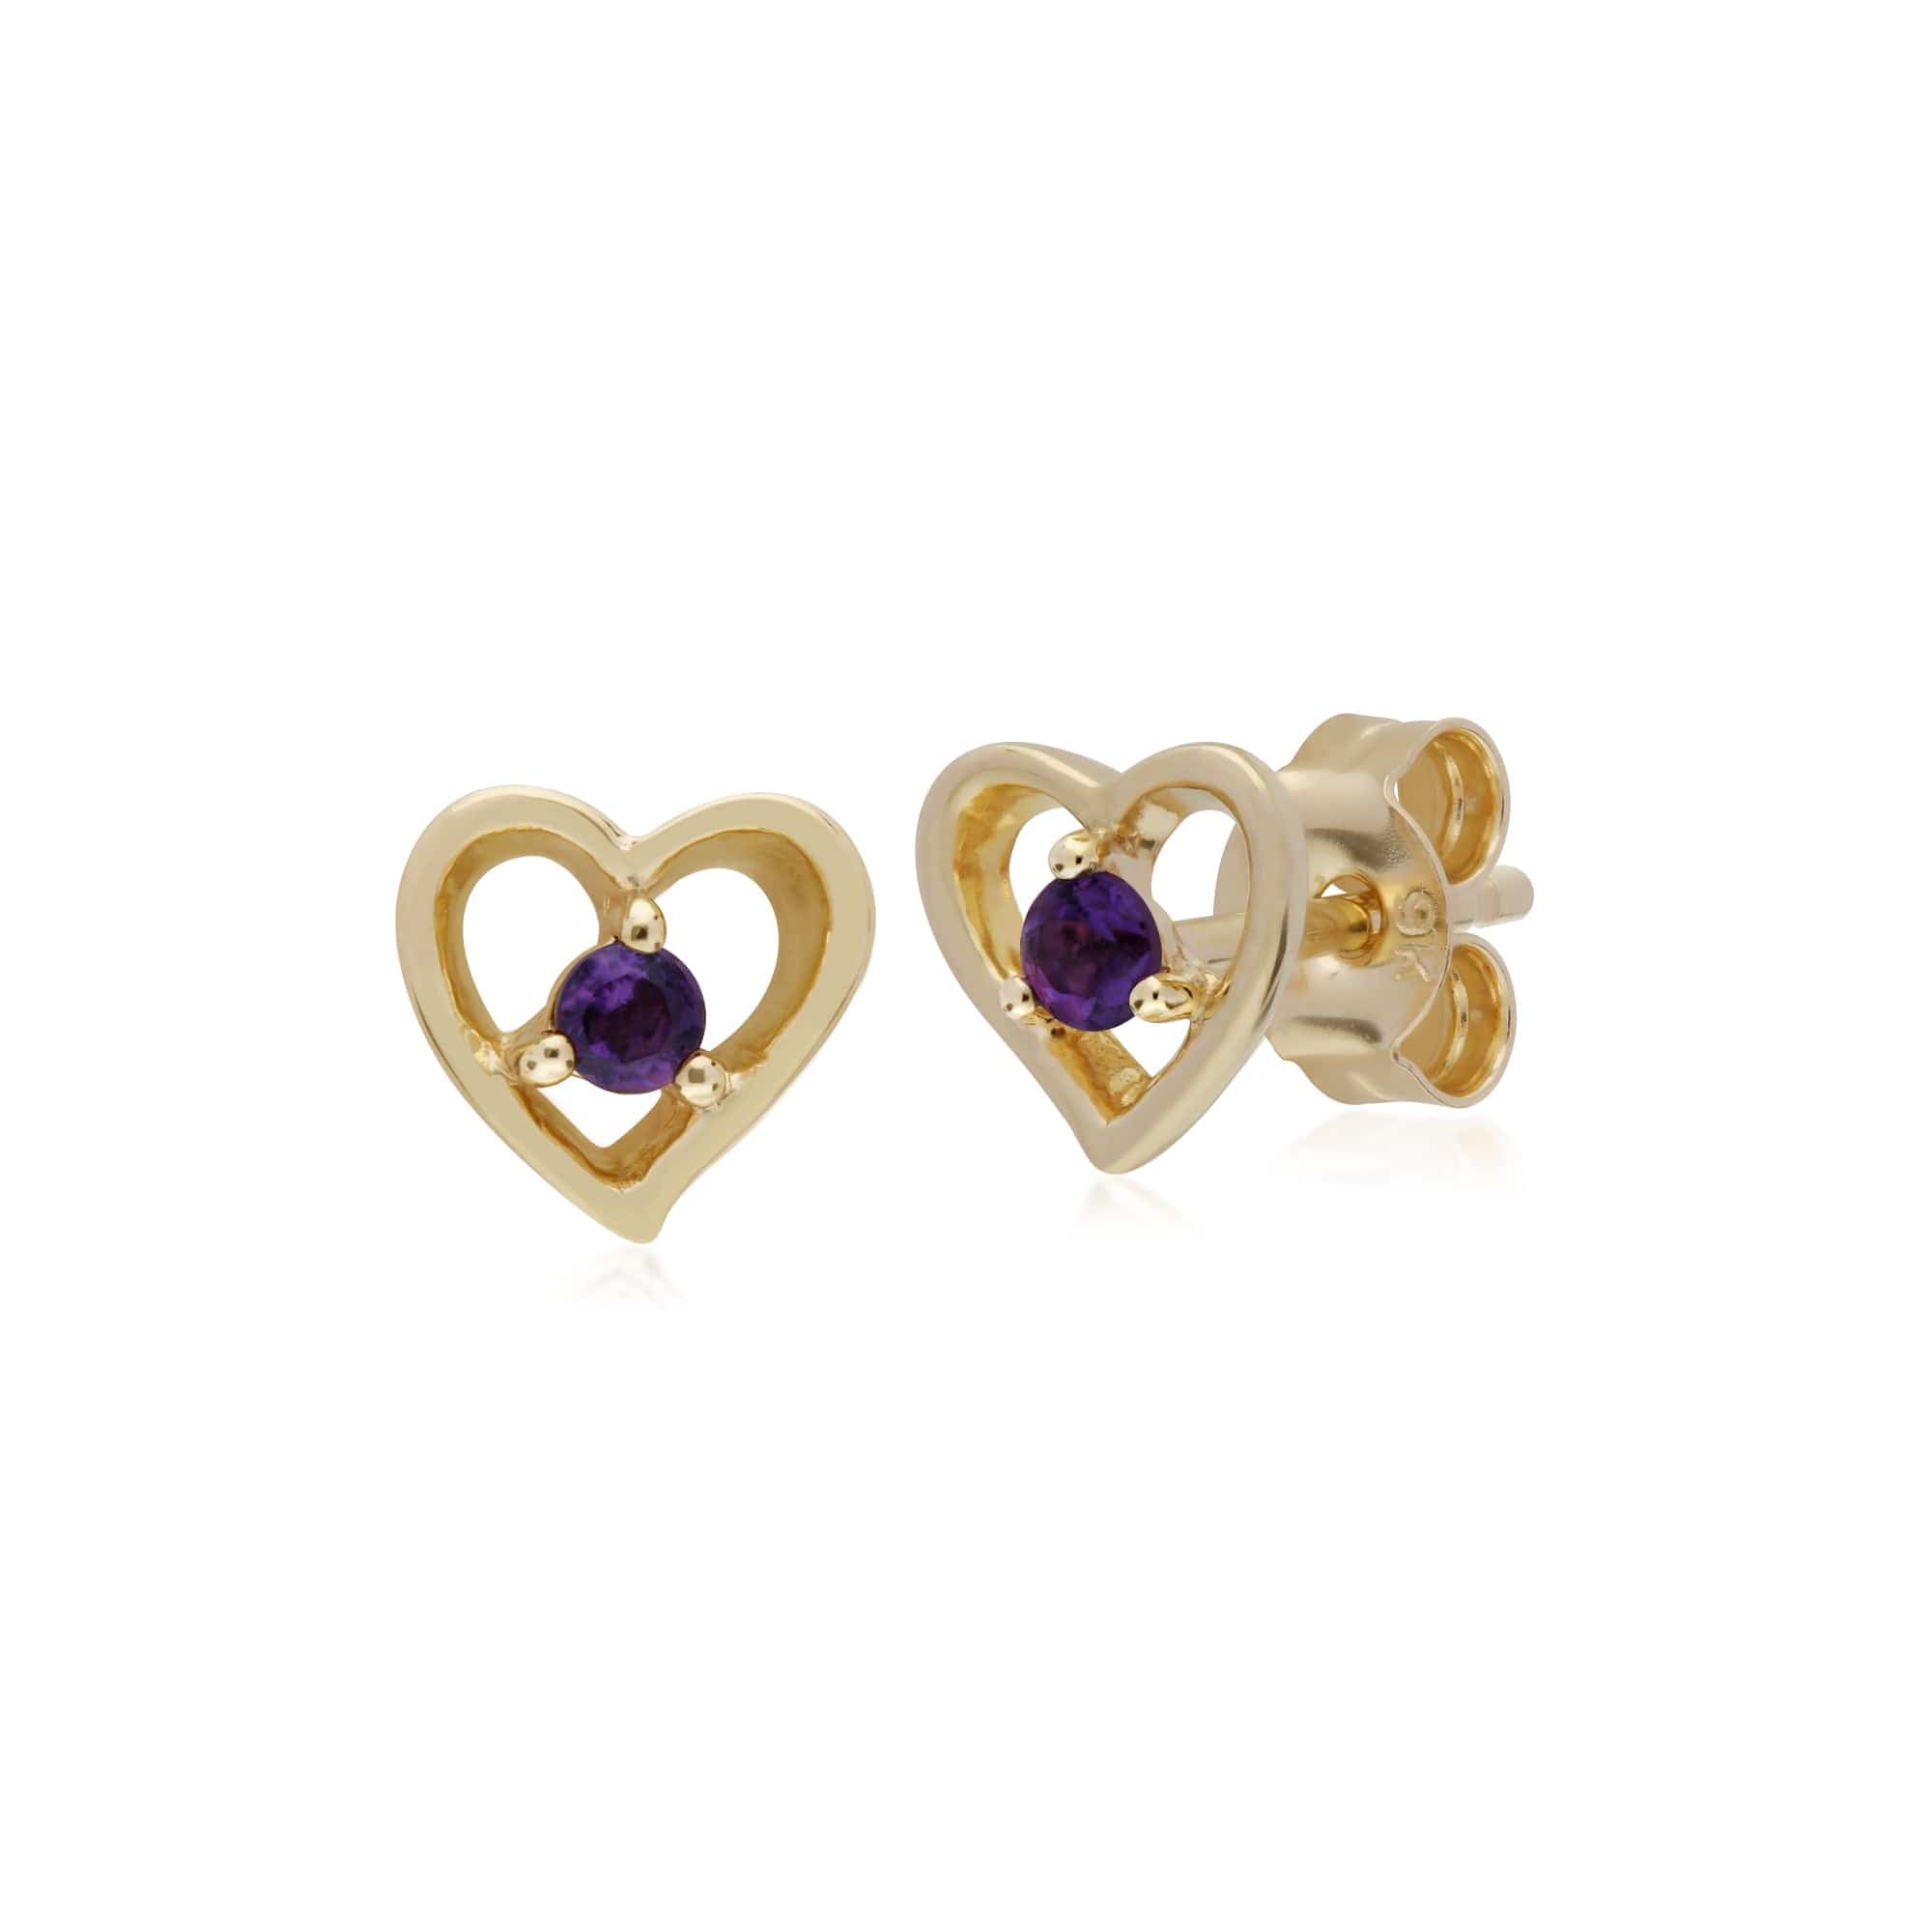 135E1521059 Classic Single Stone Round Amethyst Open Love Heart Stud Earrings in 9ct Yellow Gold 1